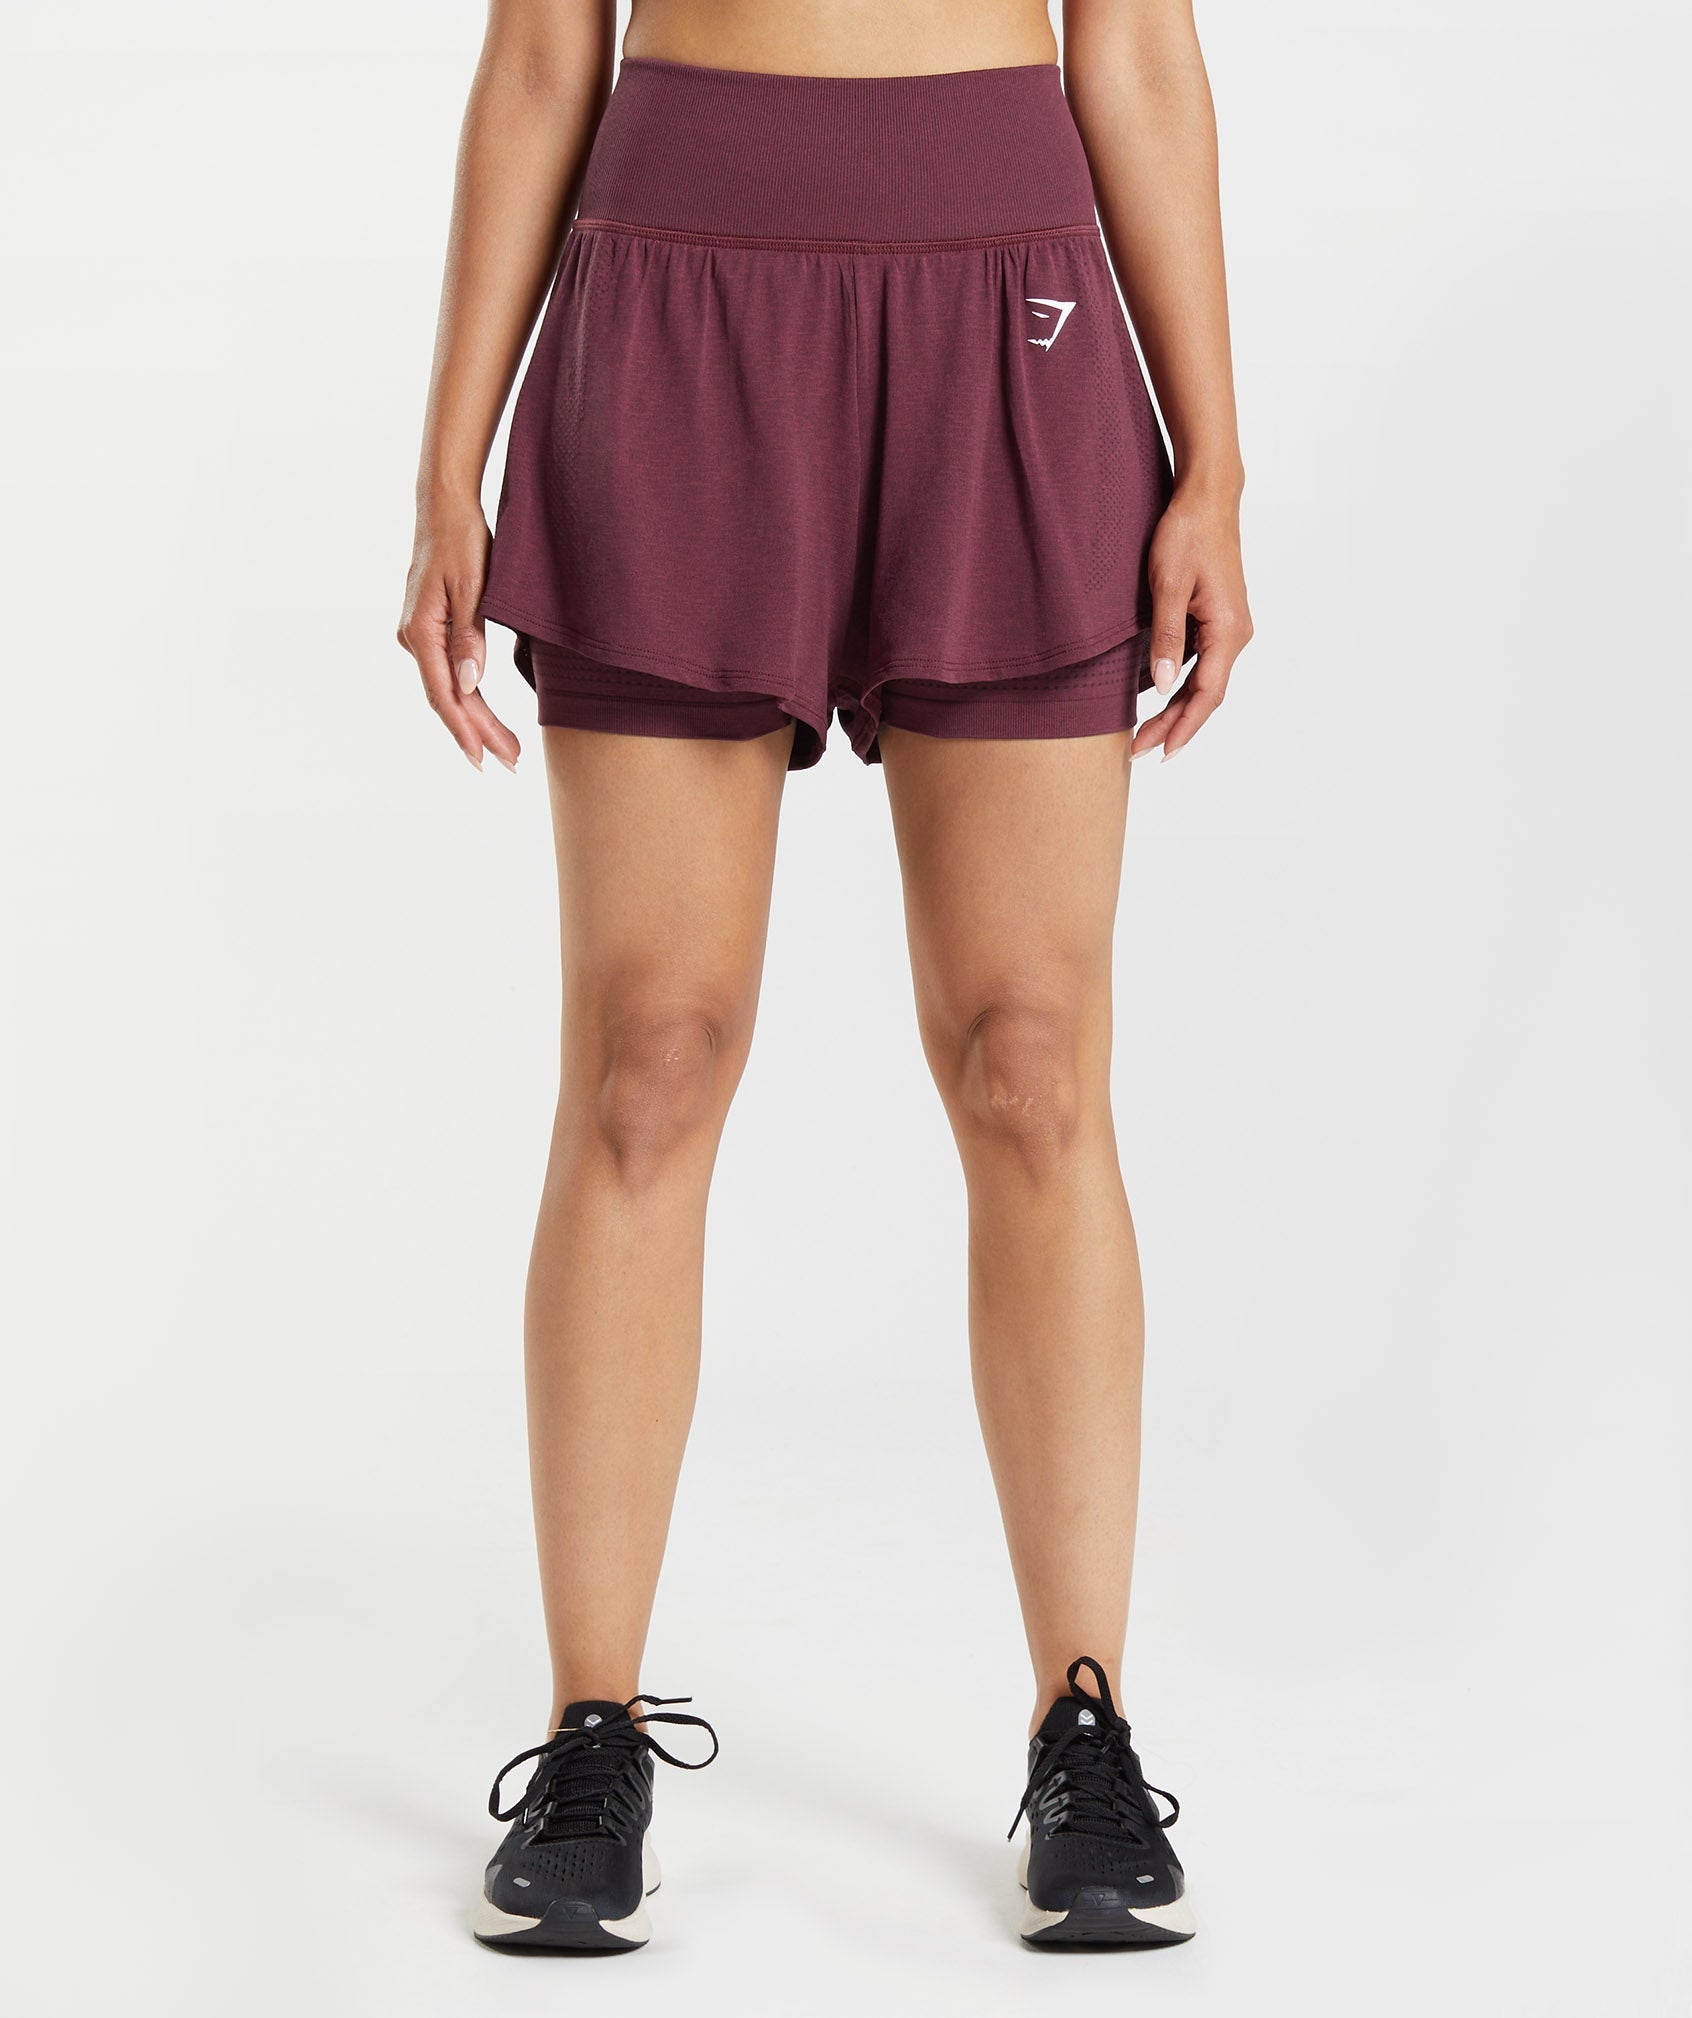 Gymshark vital seamless 2.0 shorts pink marl - $48 - From Flipped